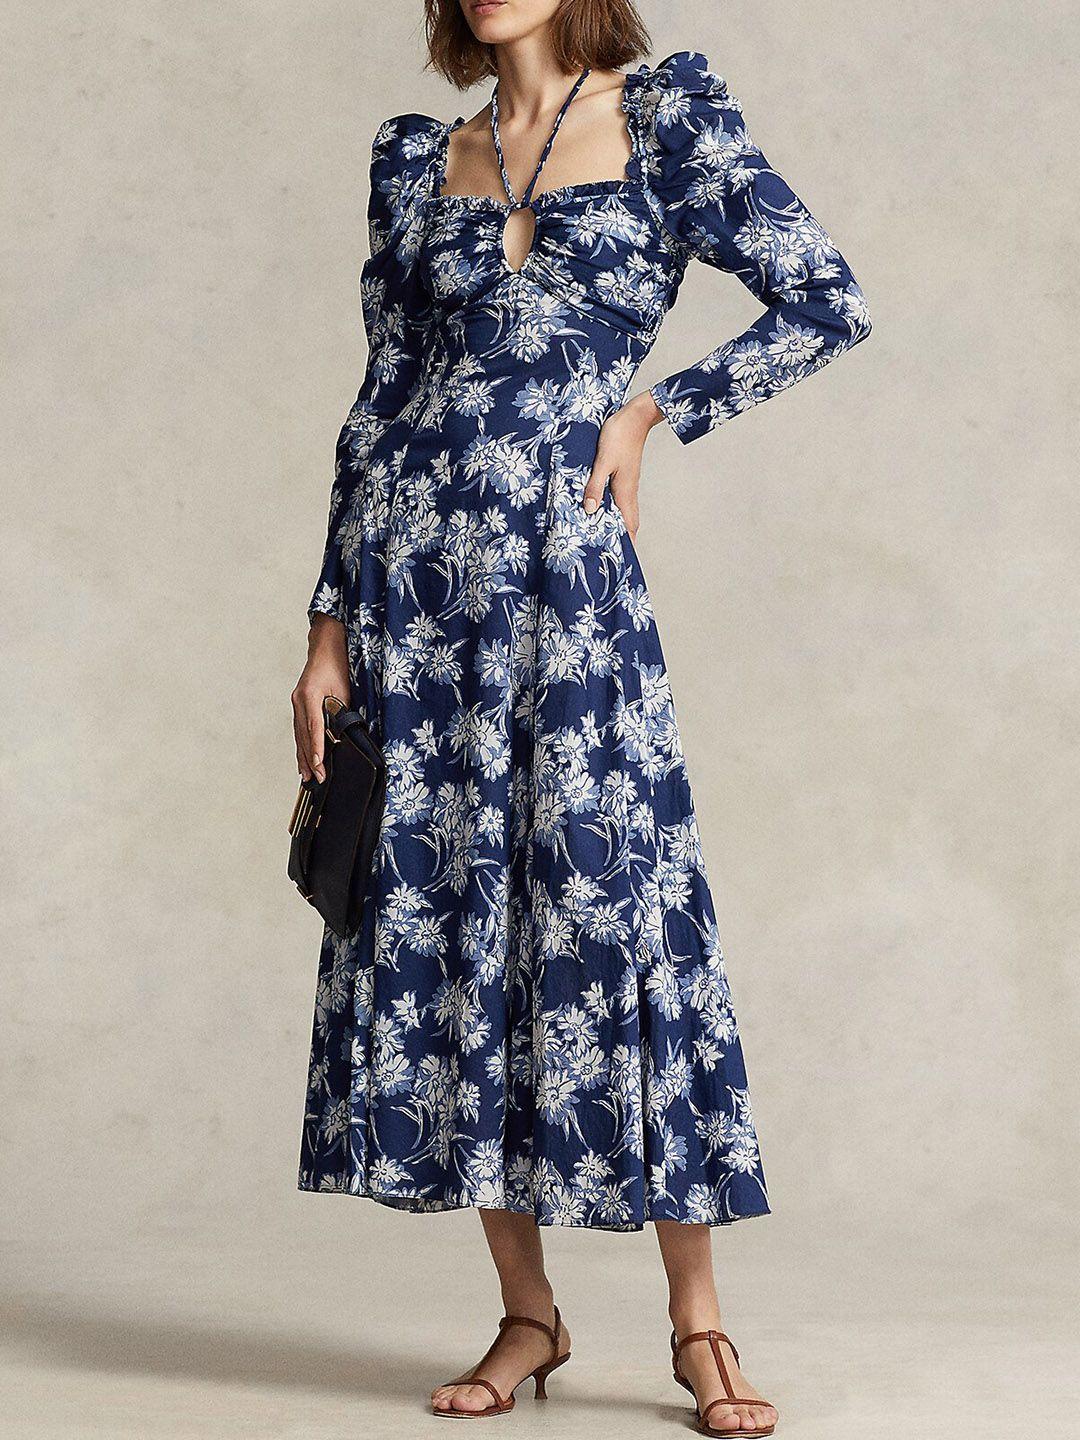 polo ralph lauren floral printed cotton maxi dress